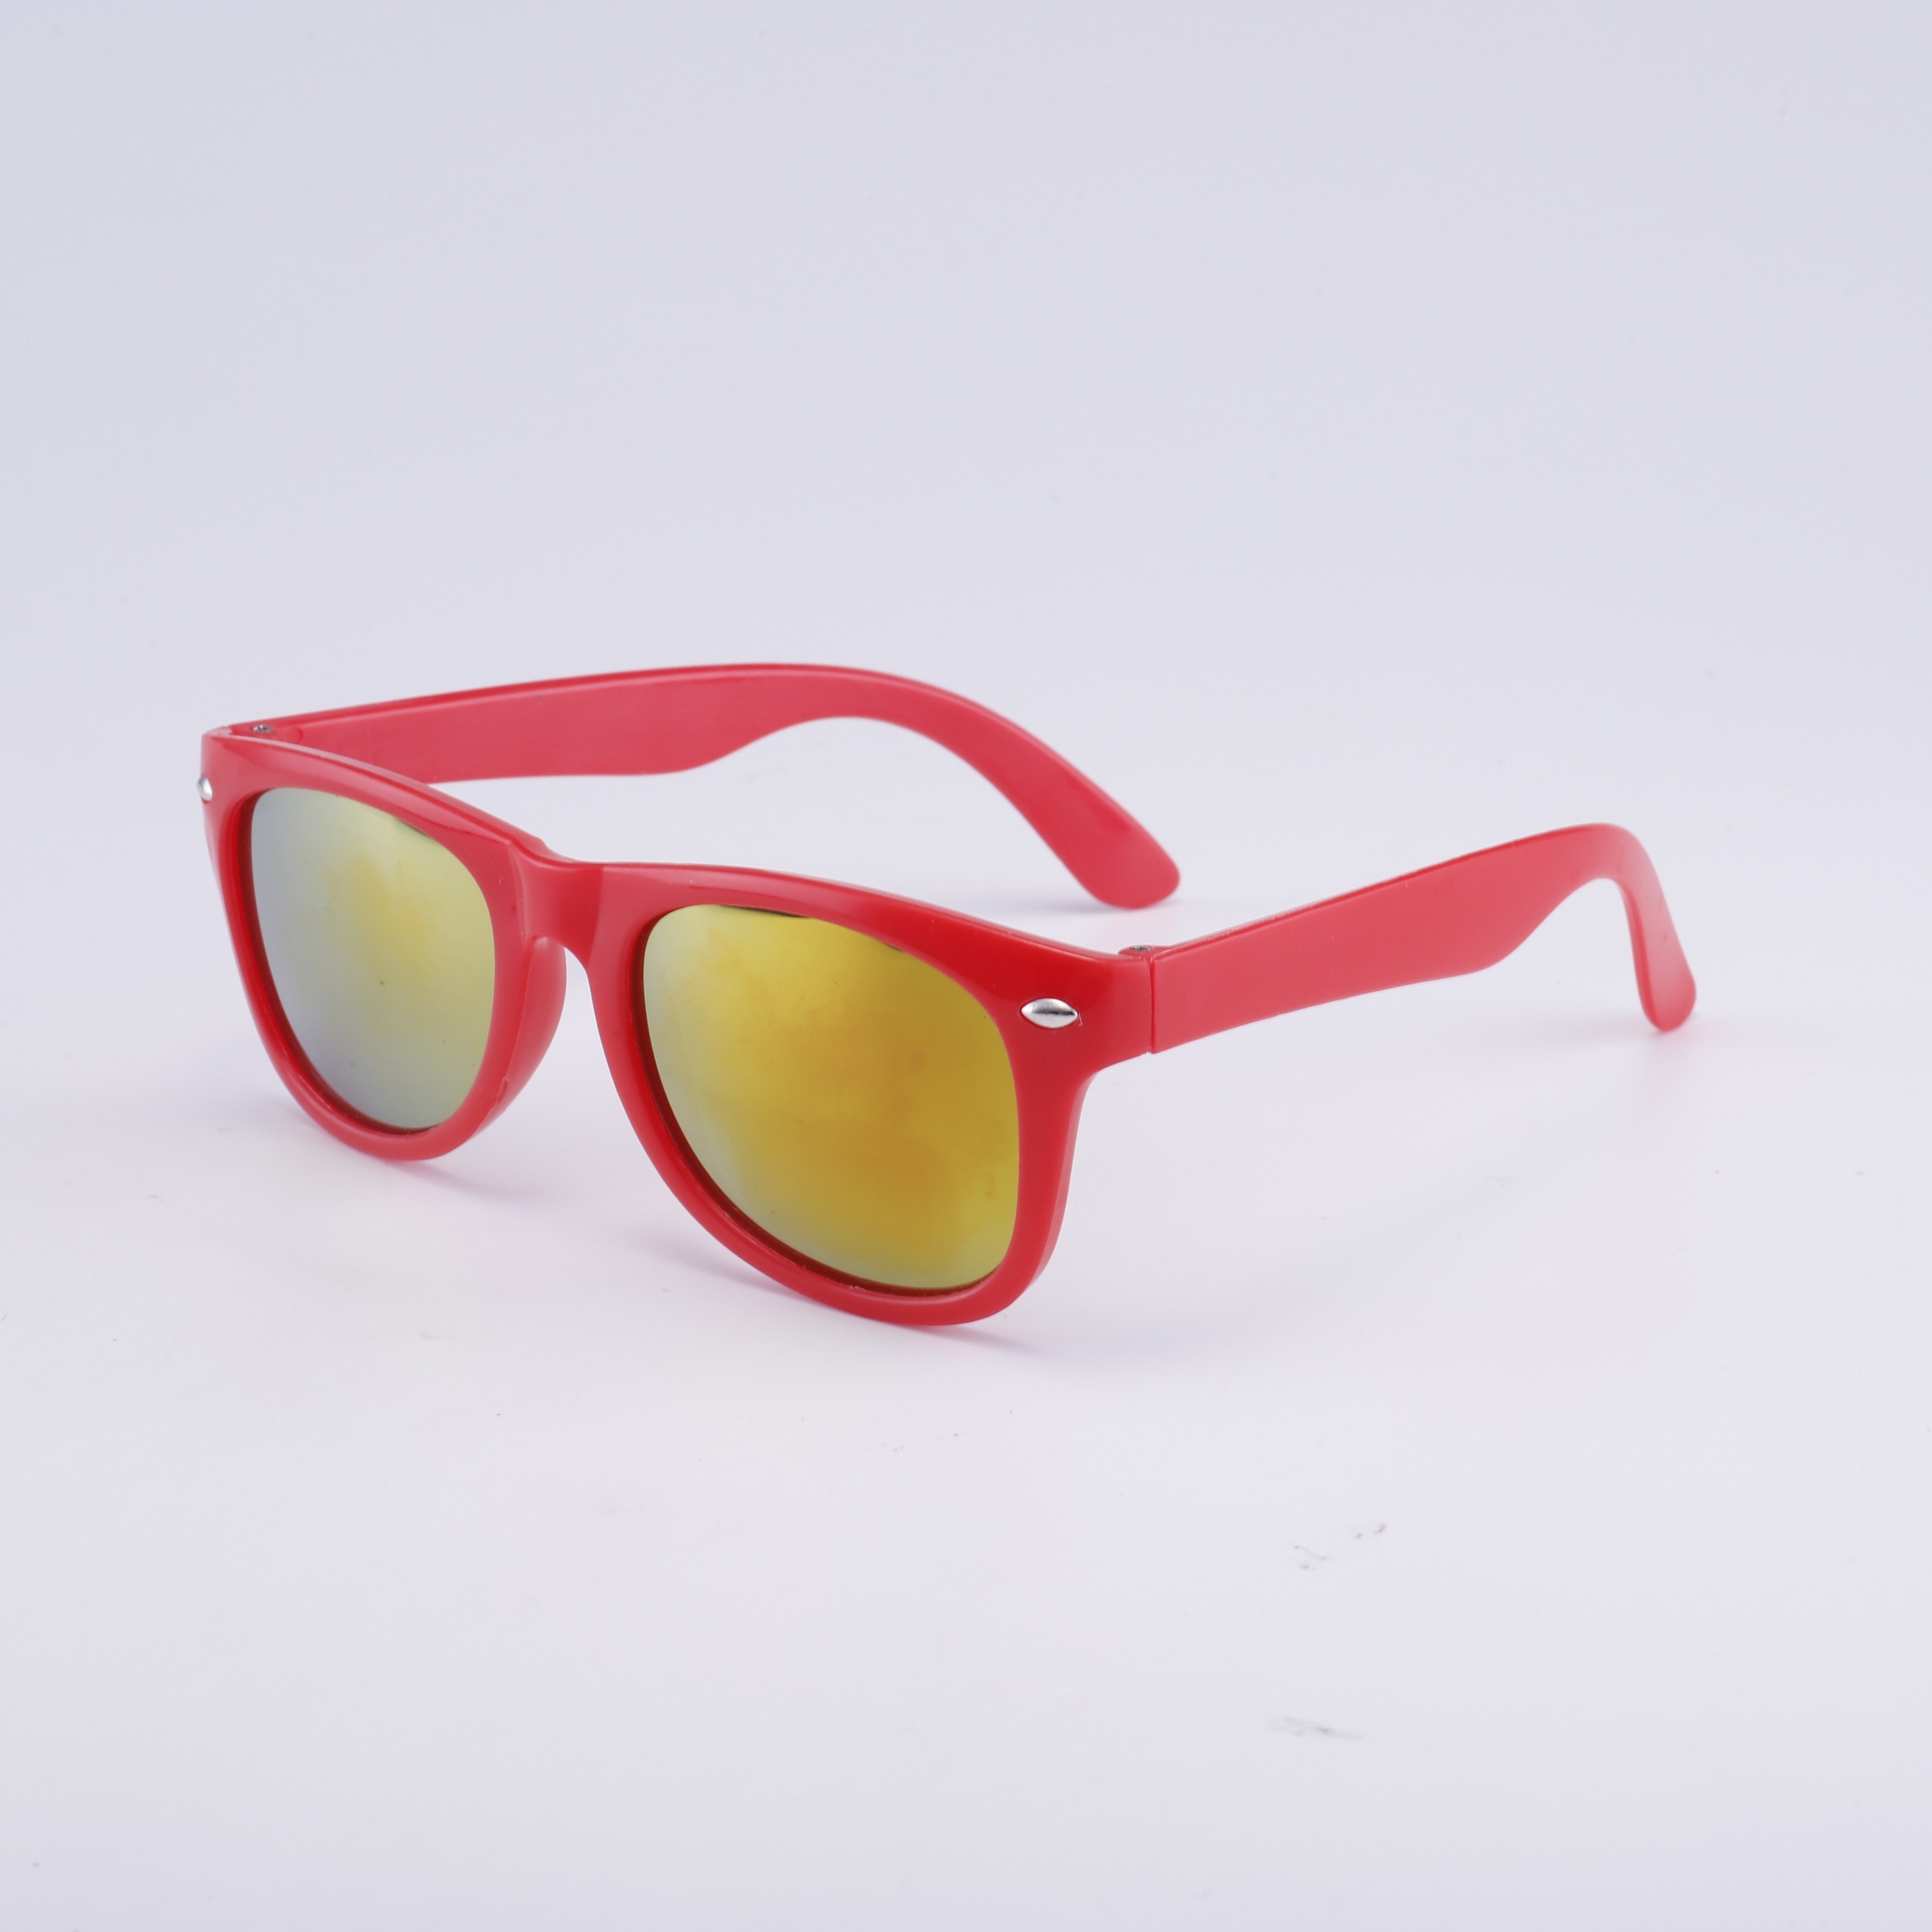 Kids,Googles,Sunglasses Bulk, Kids Sunglasses Party Favor, 12 Packs Neon Sunglasses with UV400 Protection for Kids, Boys and Girls Goody Bag Favors